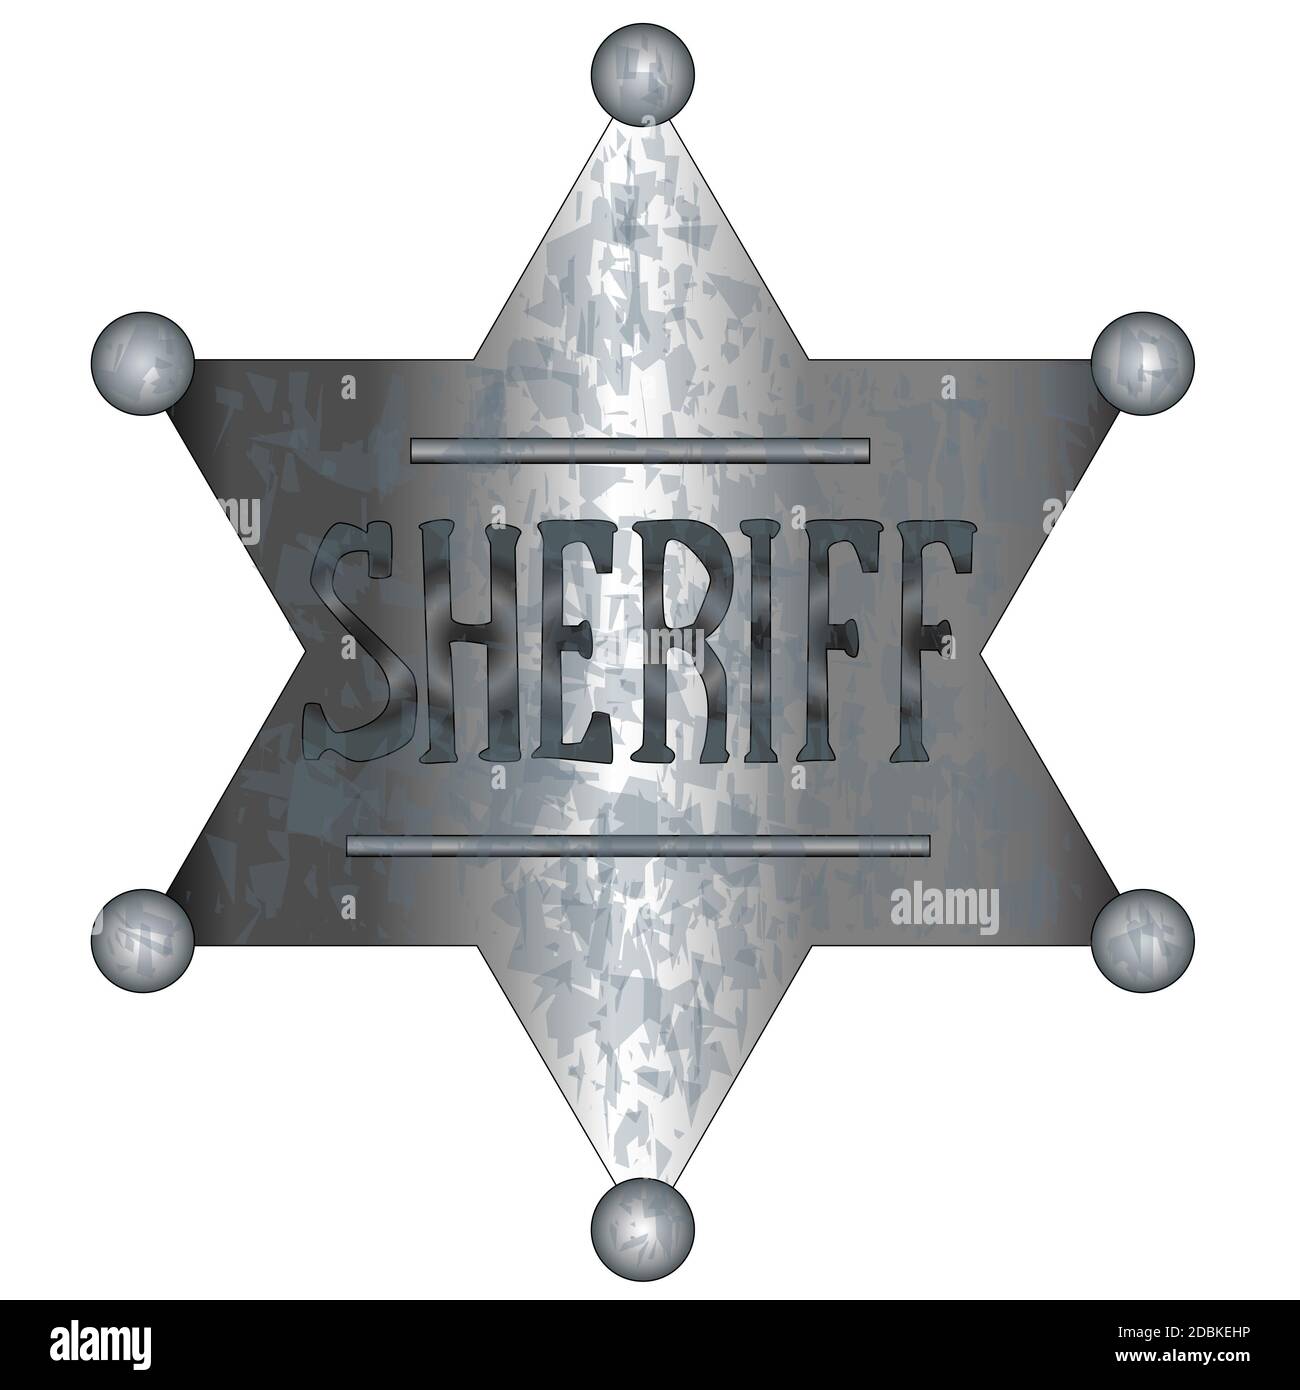 A US wild west sheriff badge. Stock Photo